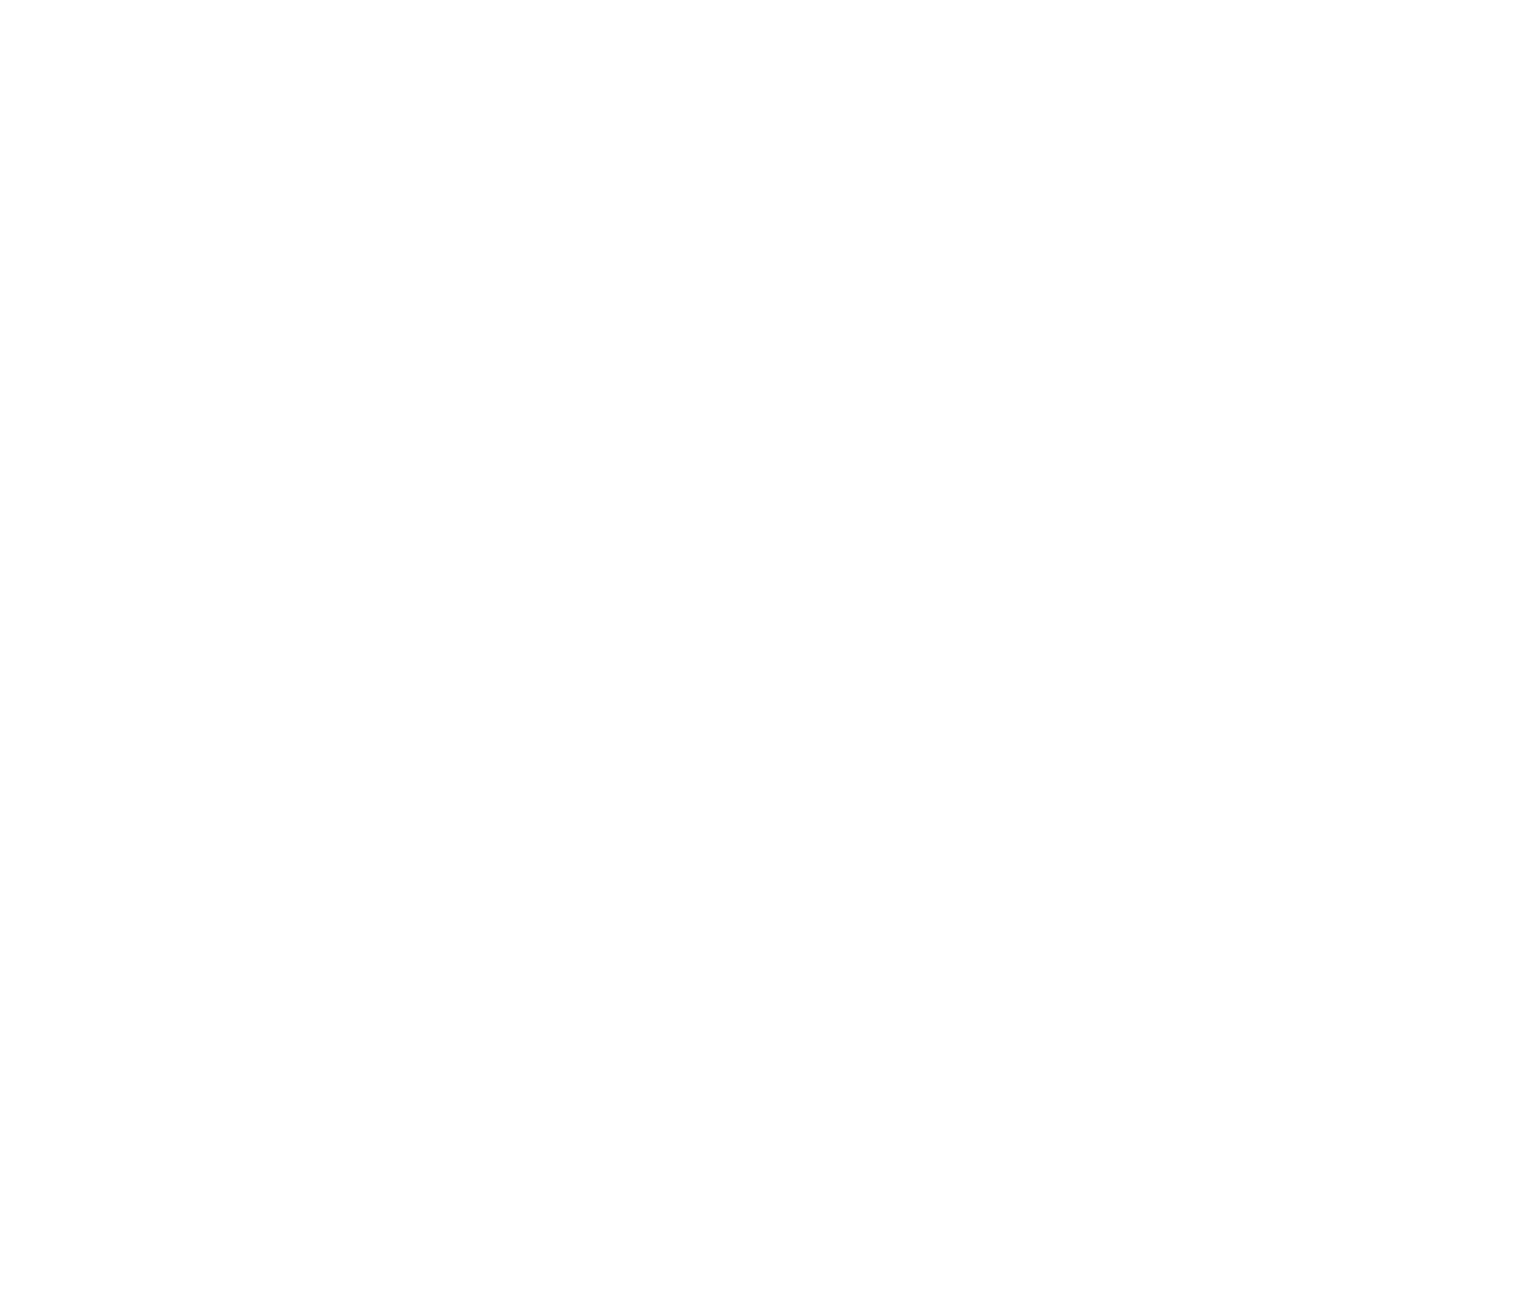 CPI Card Group logo for dark backgrounds (transparent PNG)